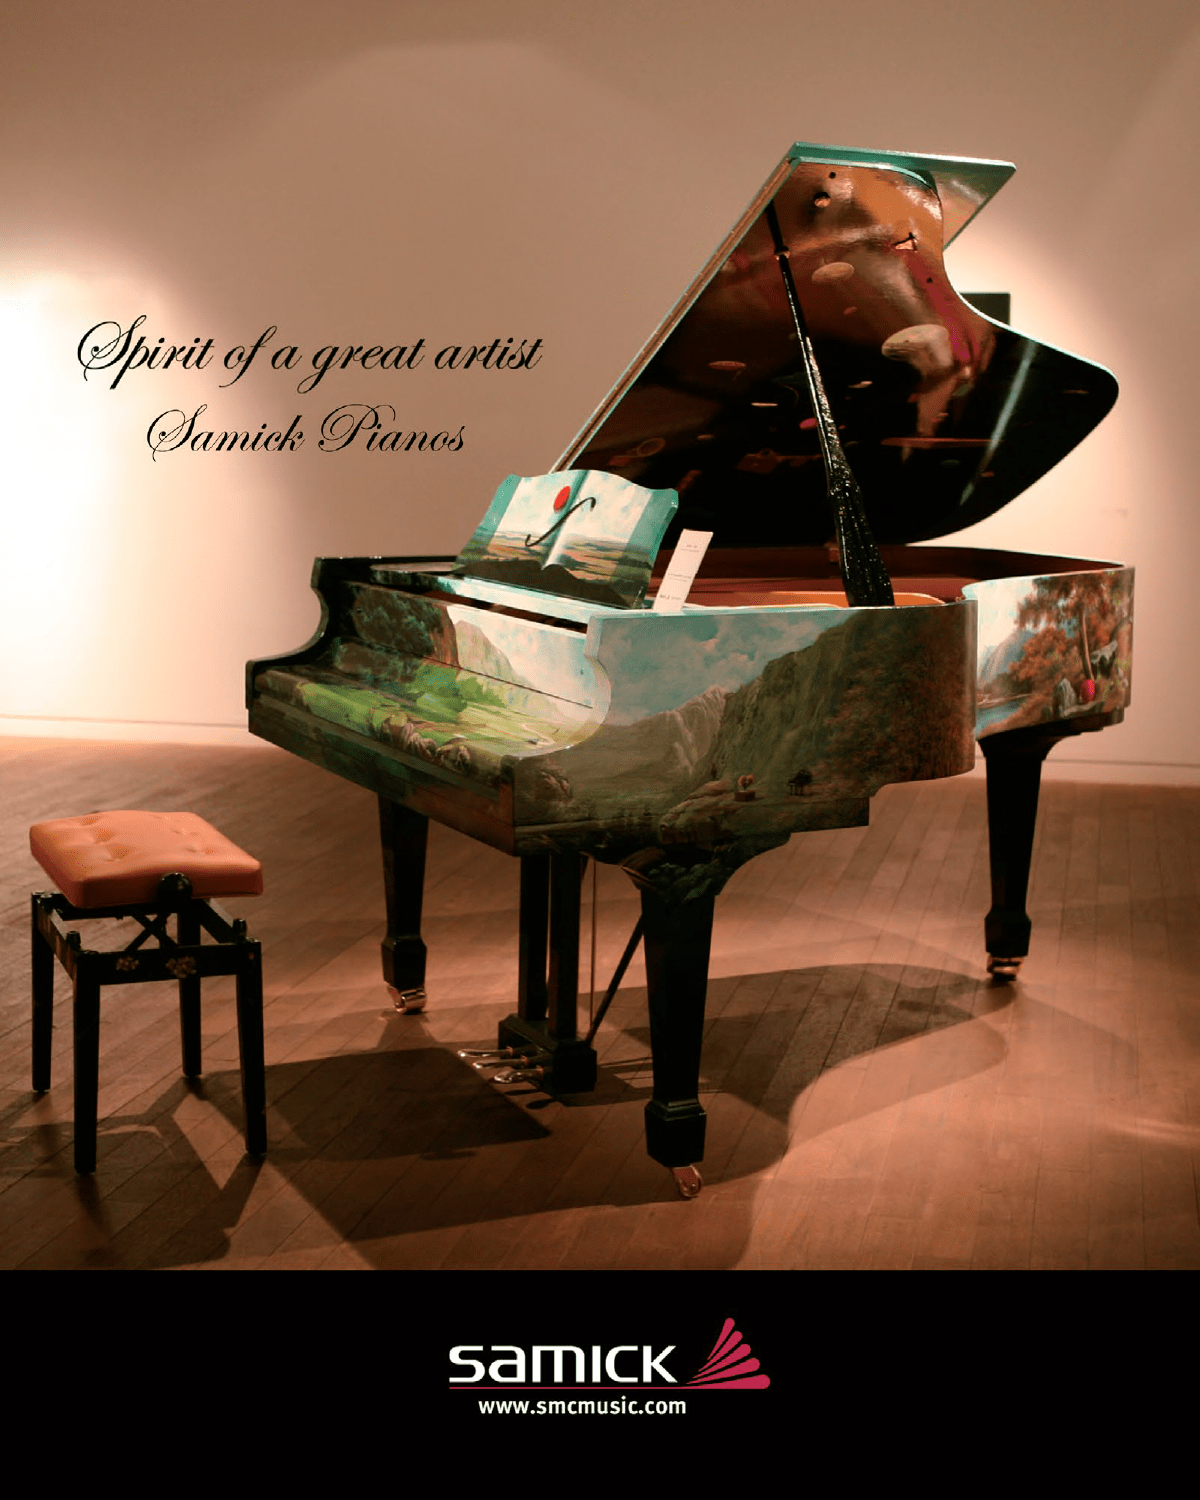 Samick Pianos, Spirit of a Great Artist